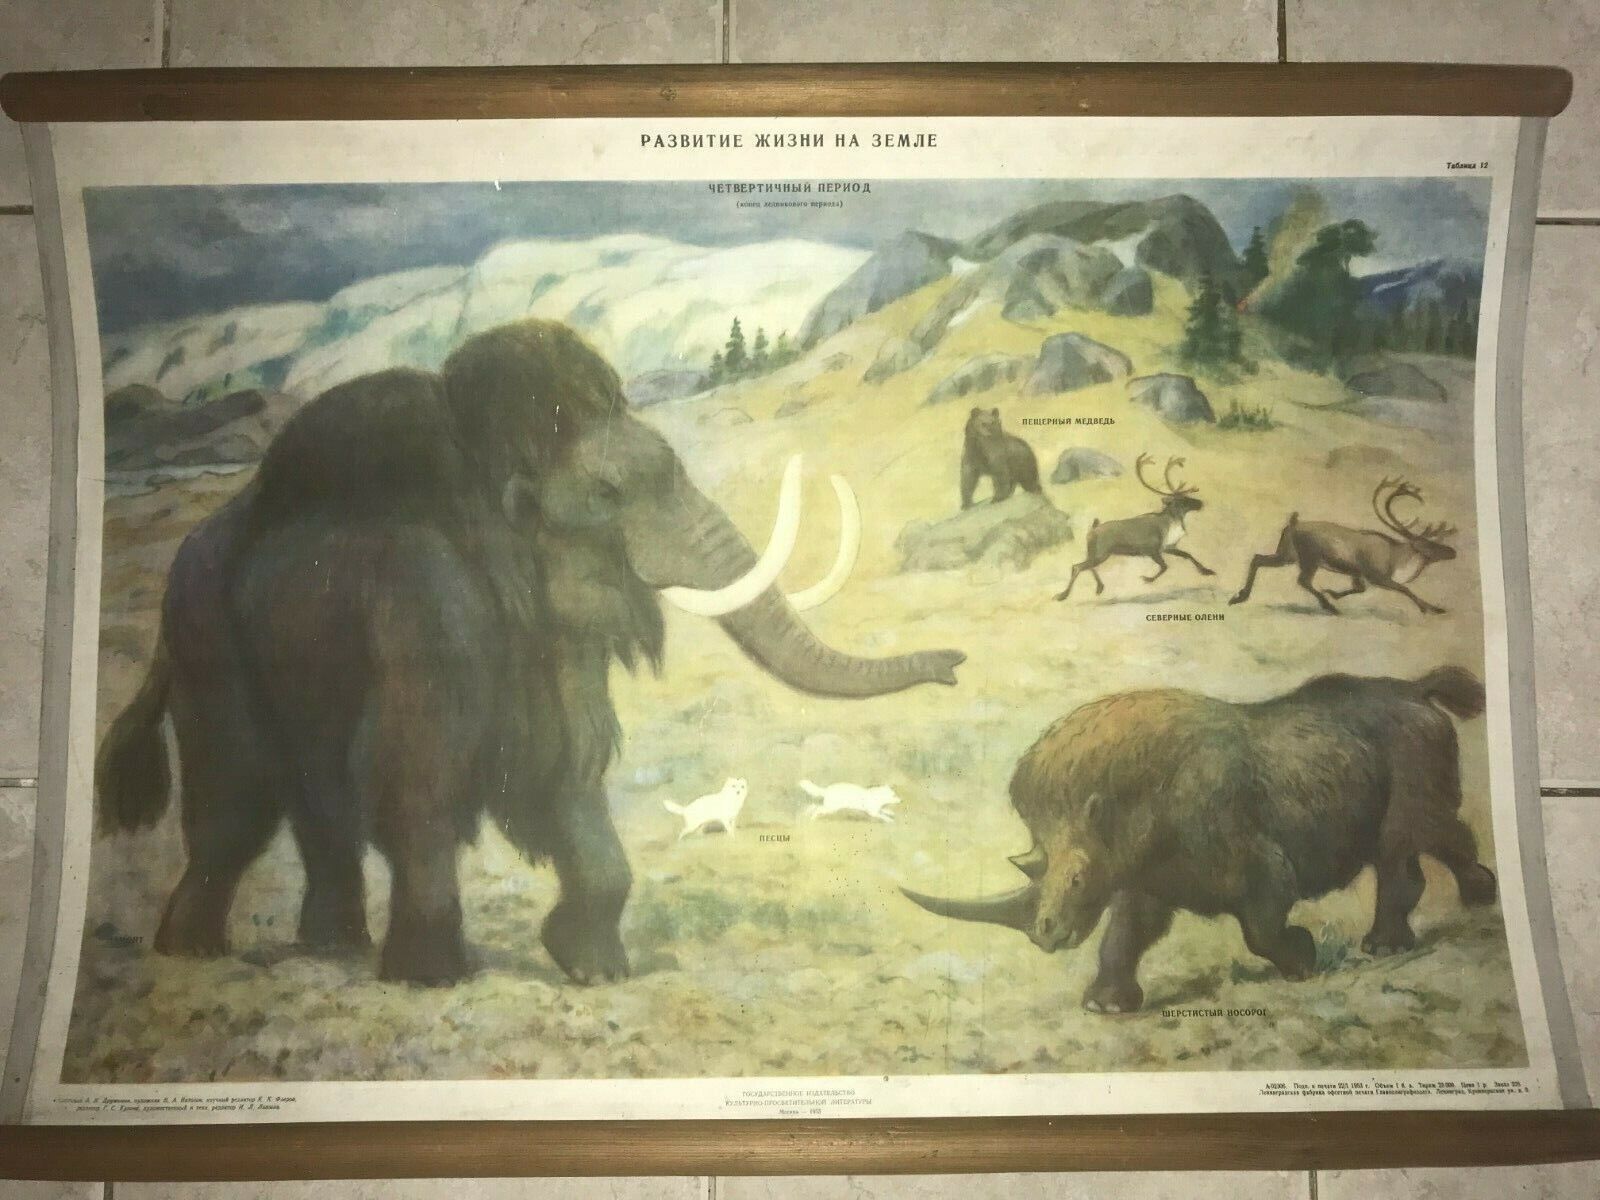 Original Russian school chart of prehistoric mammoth - 1953